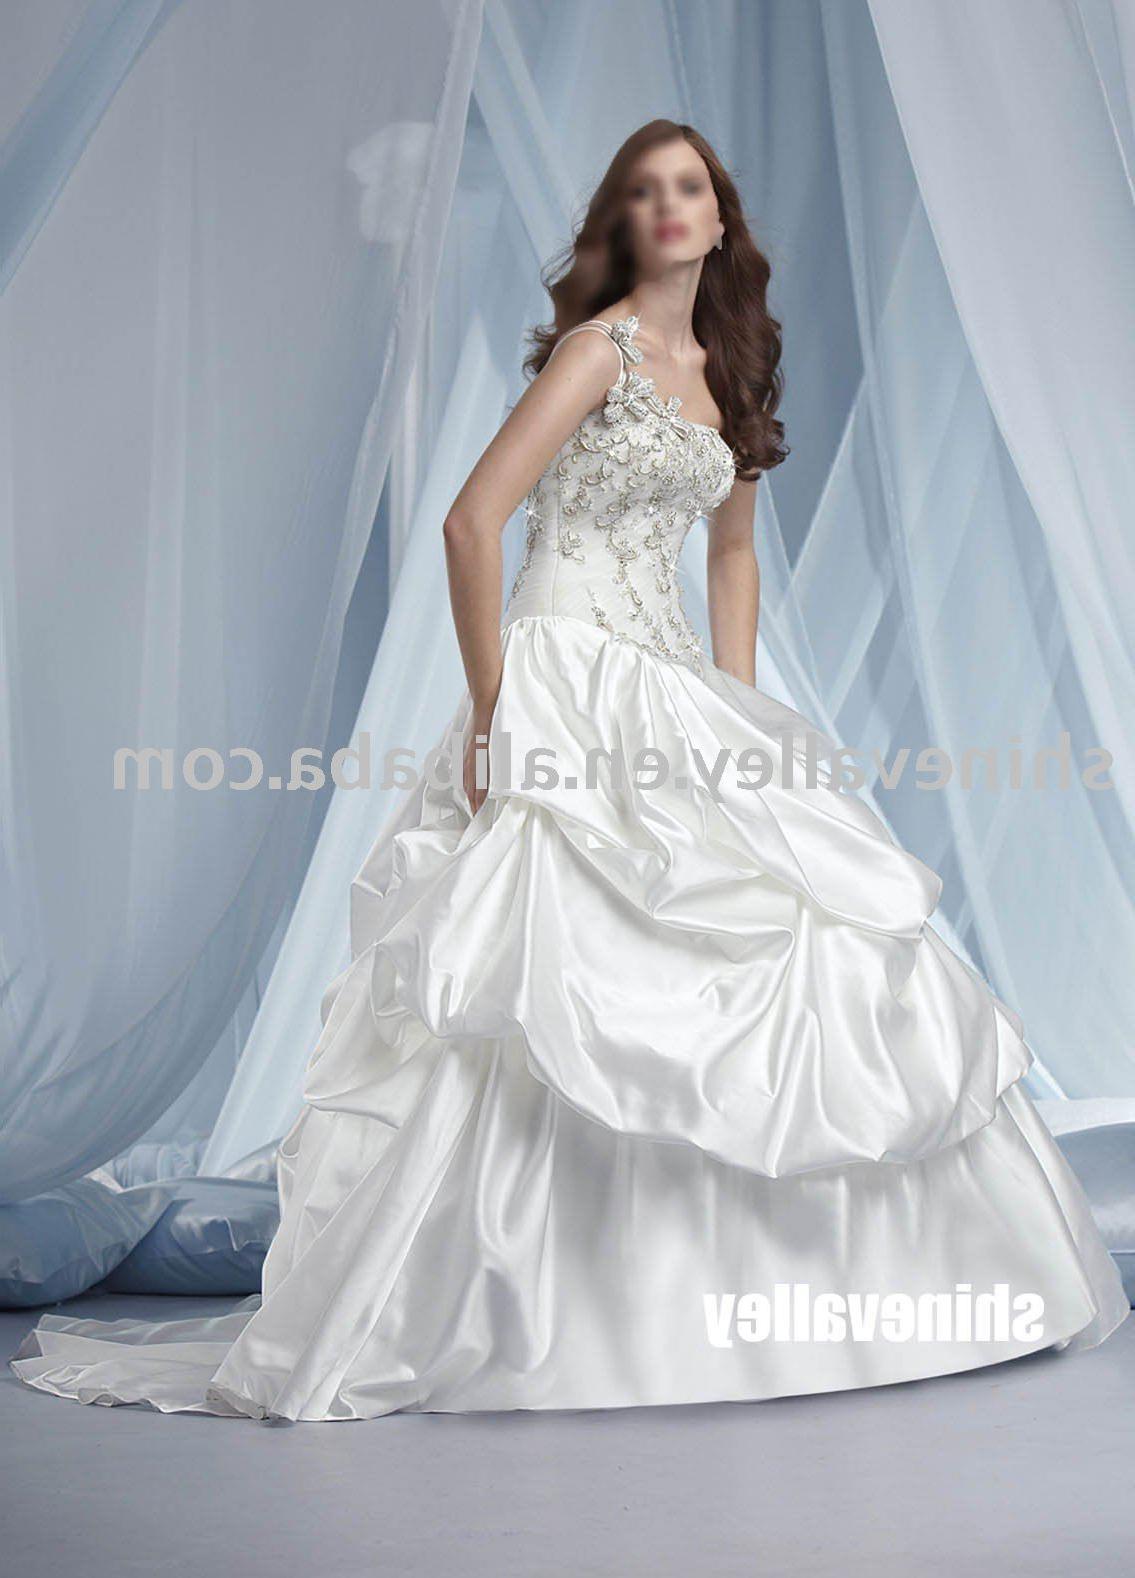 IM039 2011 new style satin and tulle white gorgeous wedding dress